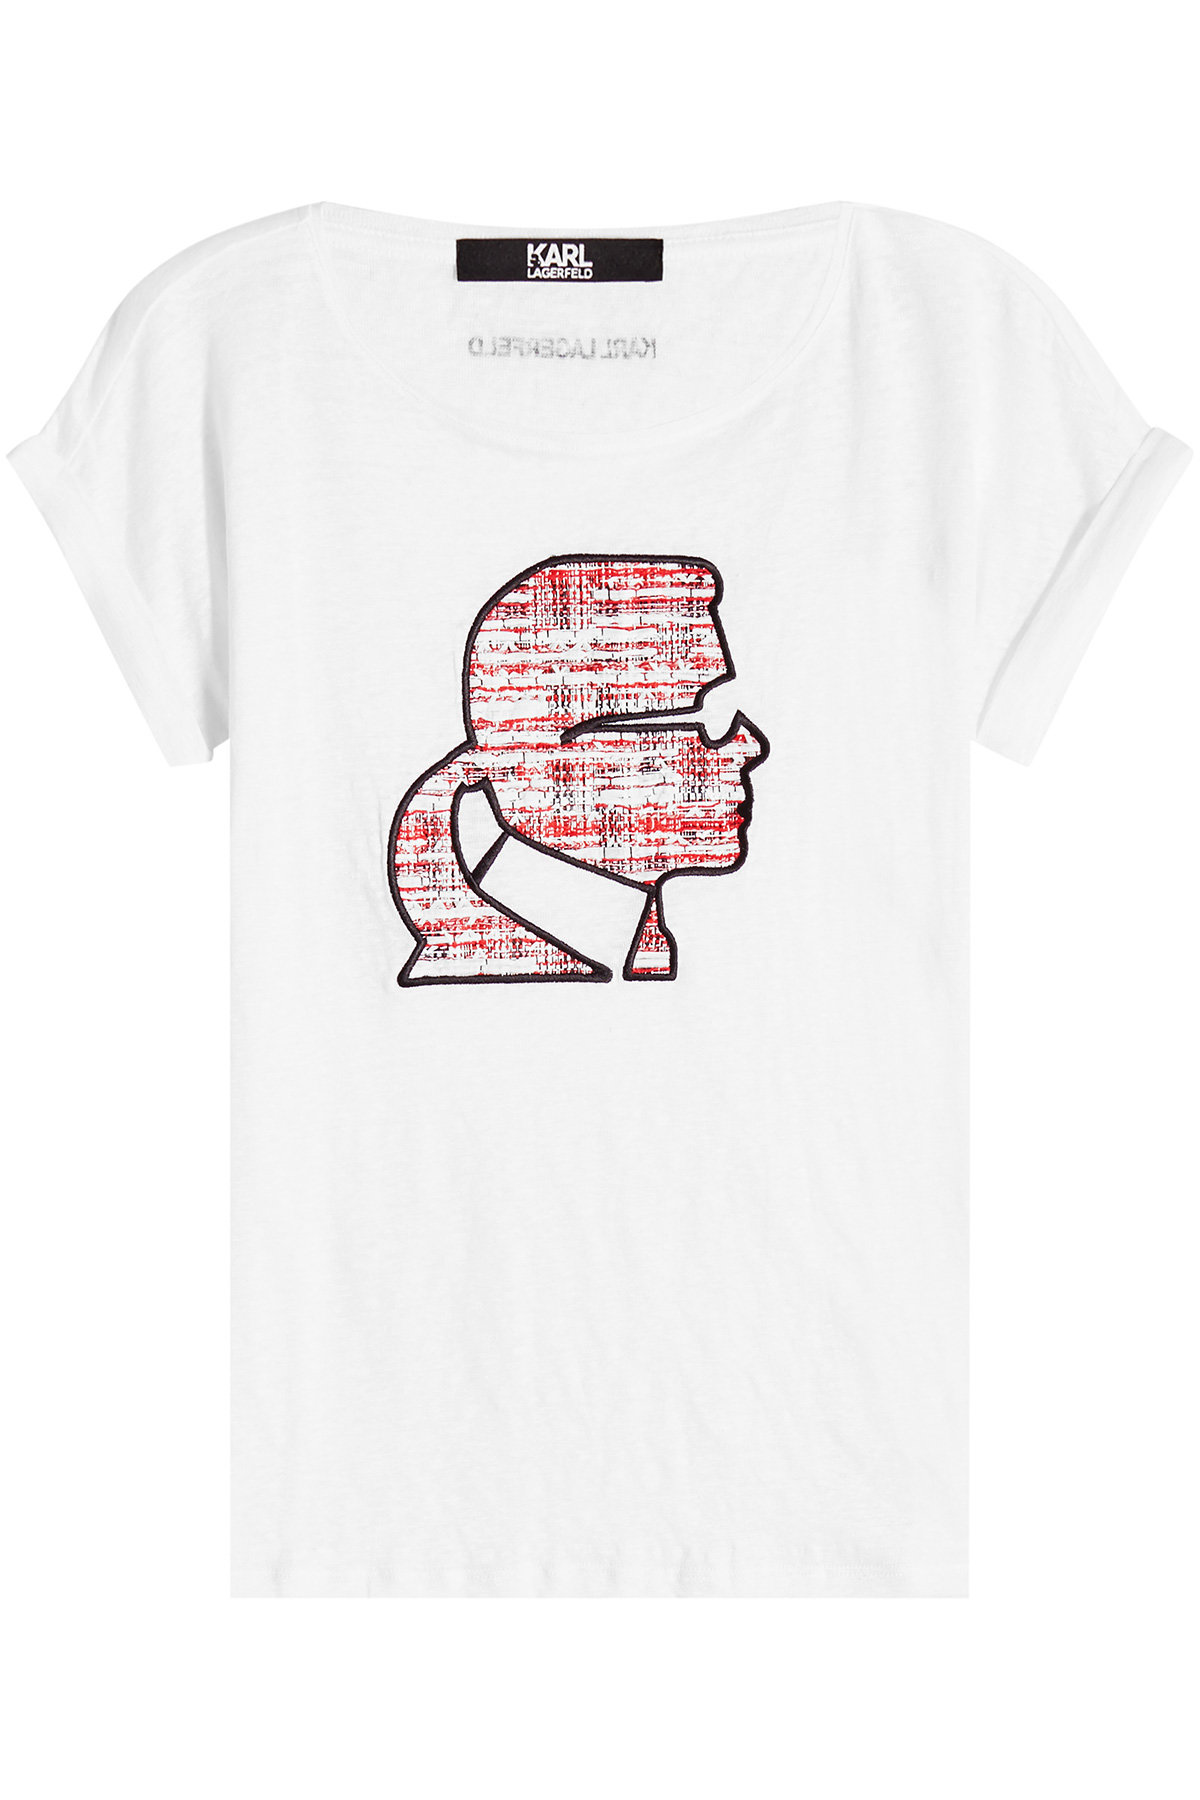 Karl Lagerfeld - Karl Profile Linen T-Shirt